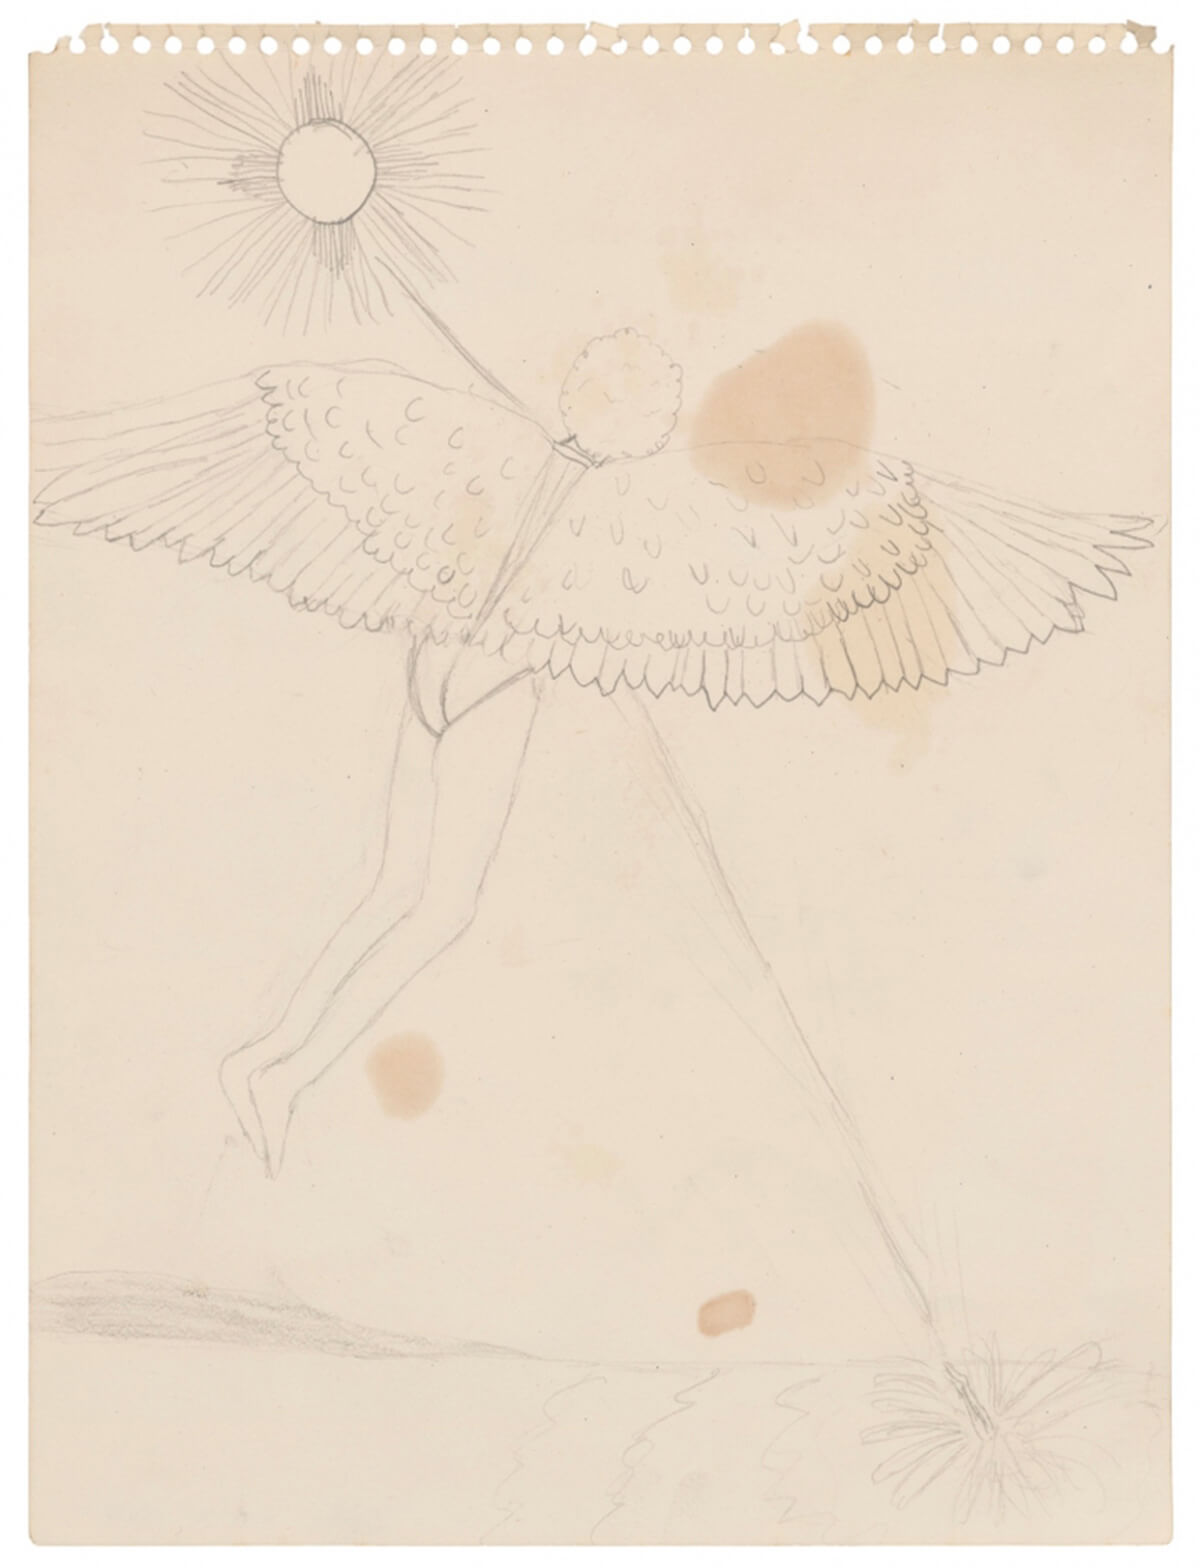 Robert Gober, <em>Icarus</em>, 1967. Graphite on spiral-edged paper, 31 x 23 cm (© Robert Gober, courtesy Matthew Marks Gallery).